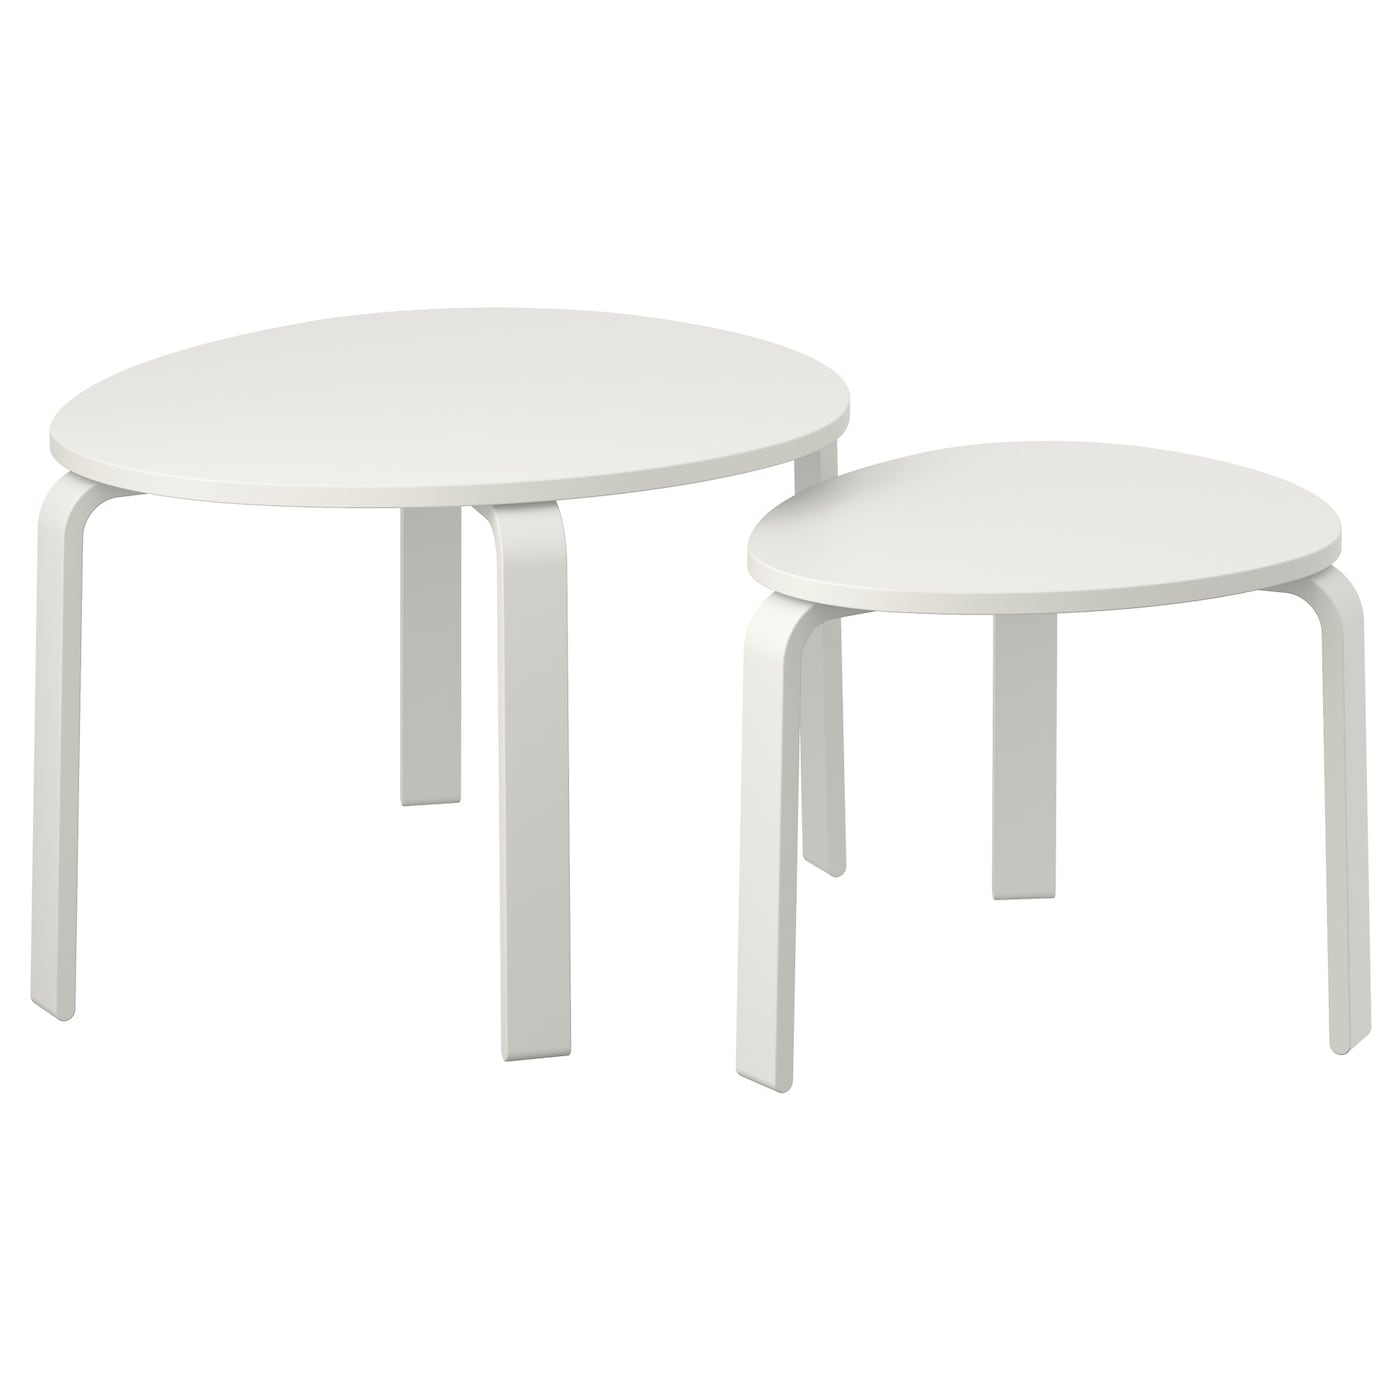 SVALSTA nest of tables, set of 2 white stain - IKEA